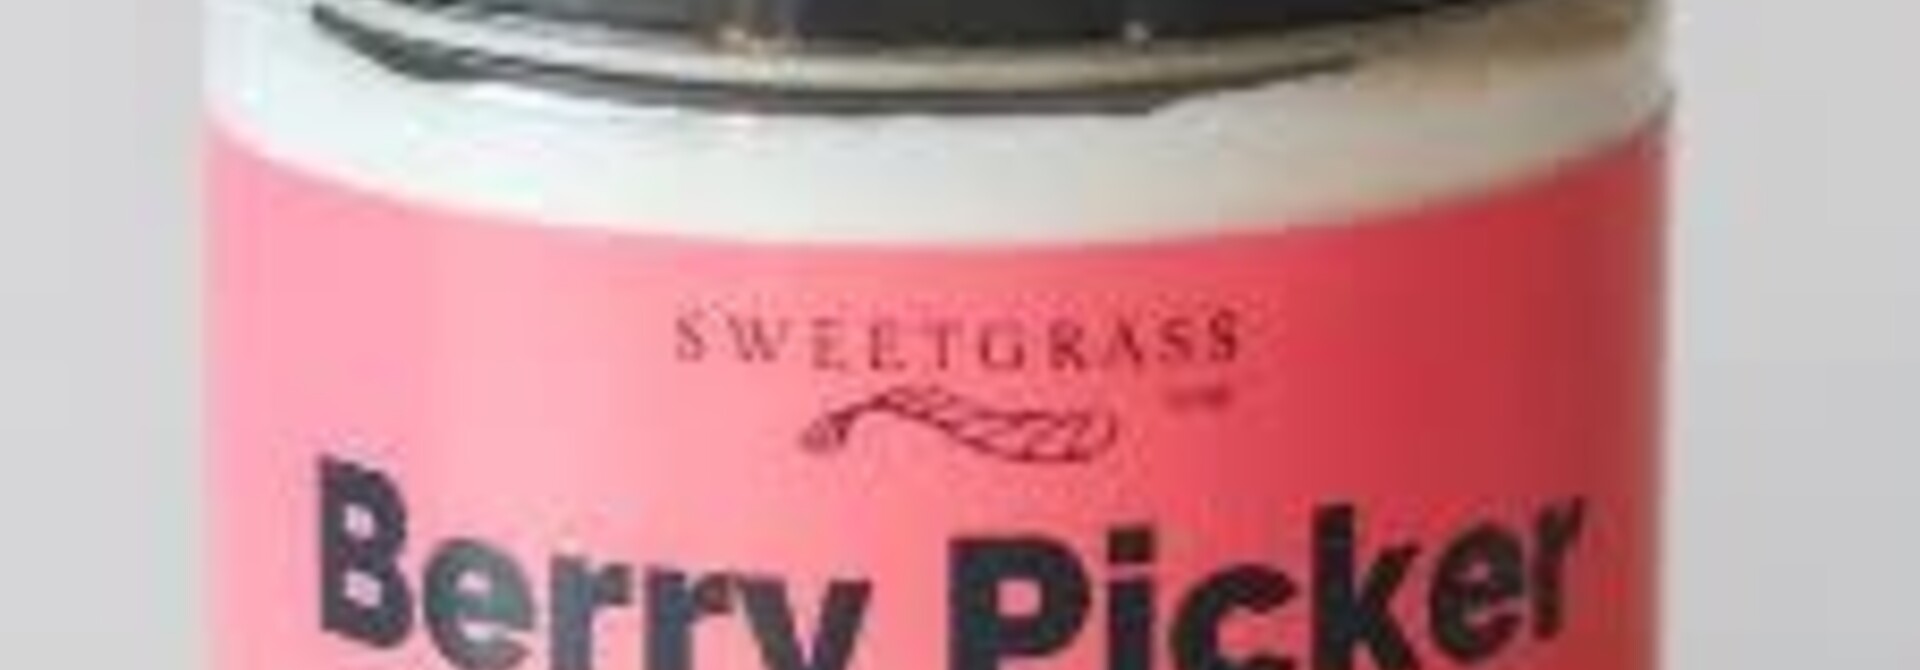 Berry Picker Body Butter by Sweetgrass Soap